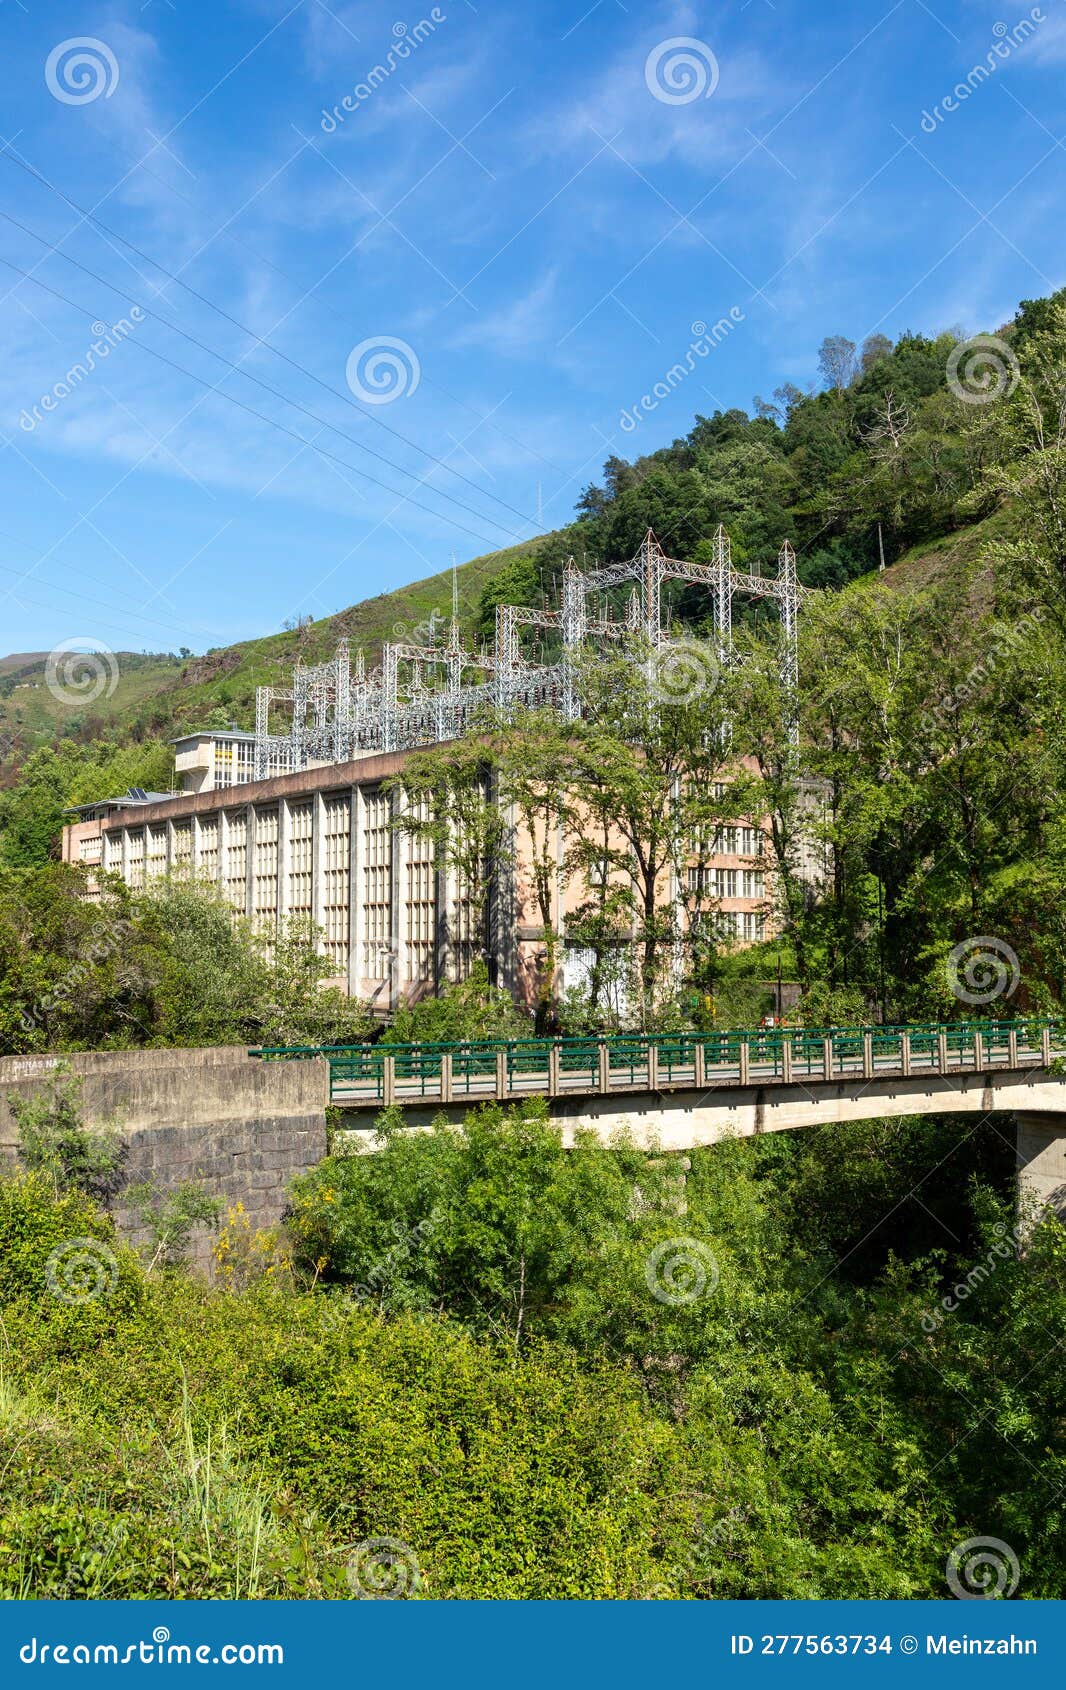 cabril hydro power plant, located in pedrogÃÂ£o grande, started operating in 1954